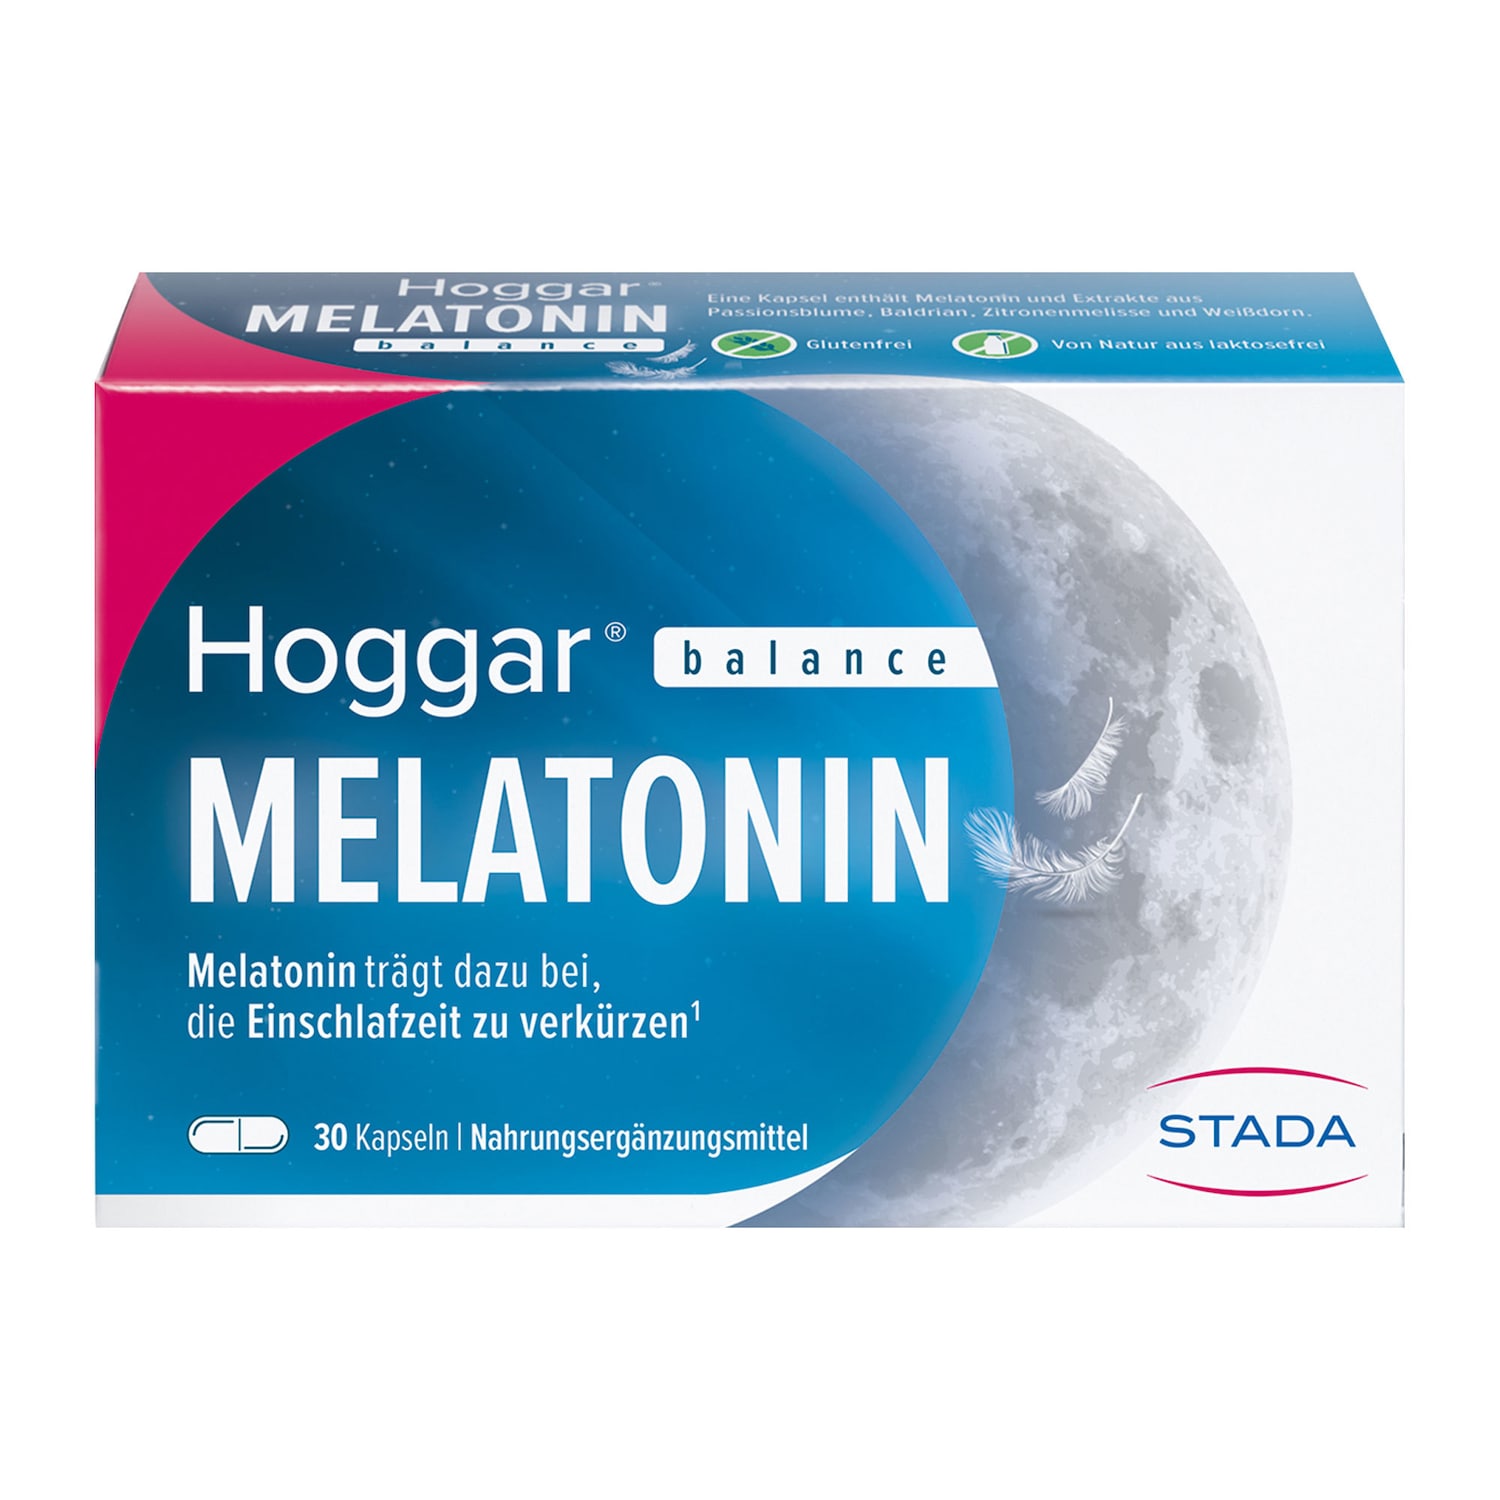 STADA Consumer Health HOGGAR Melatonin balance Capsules